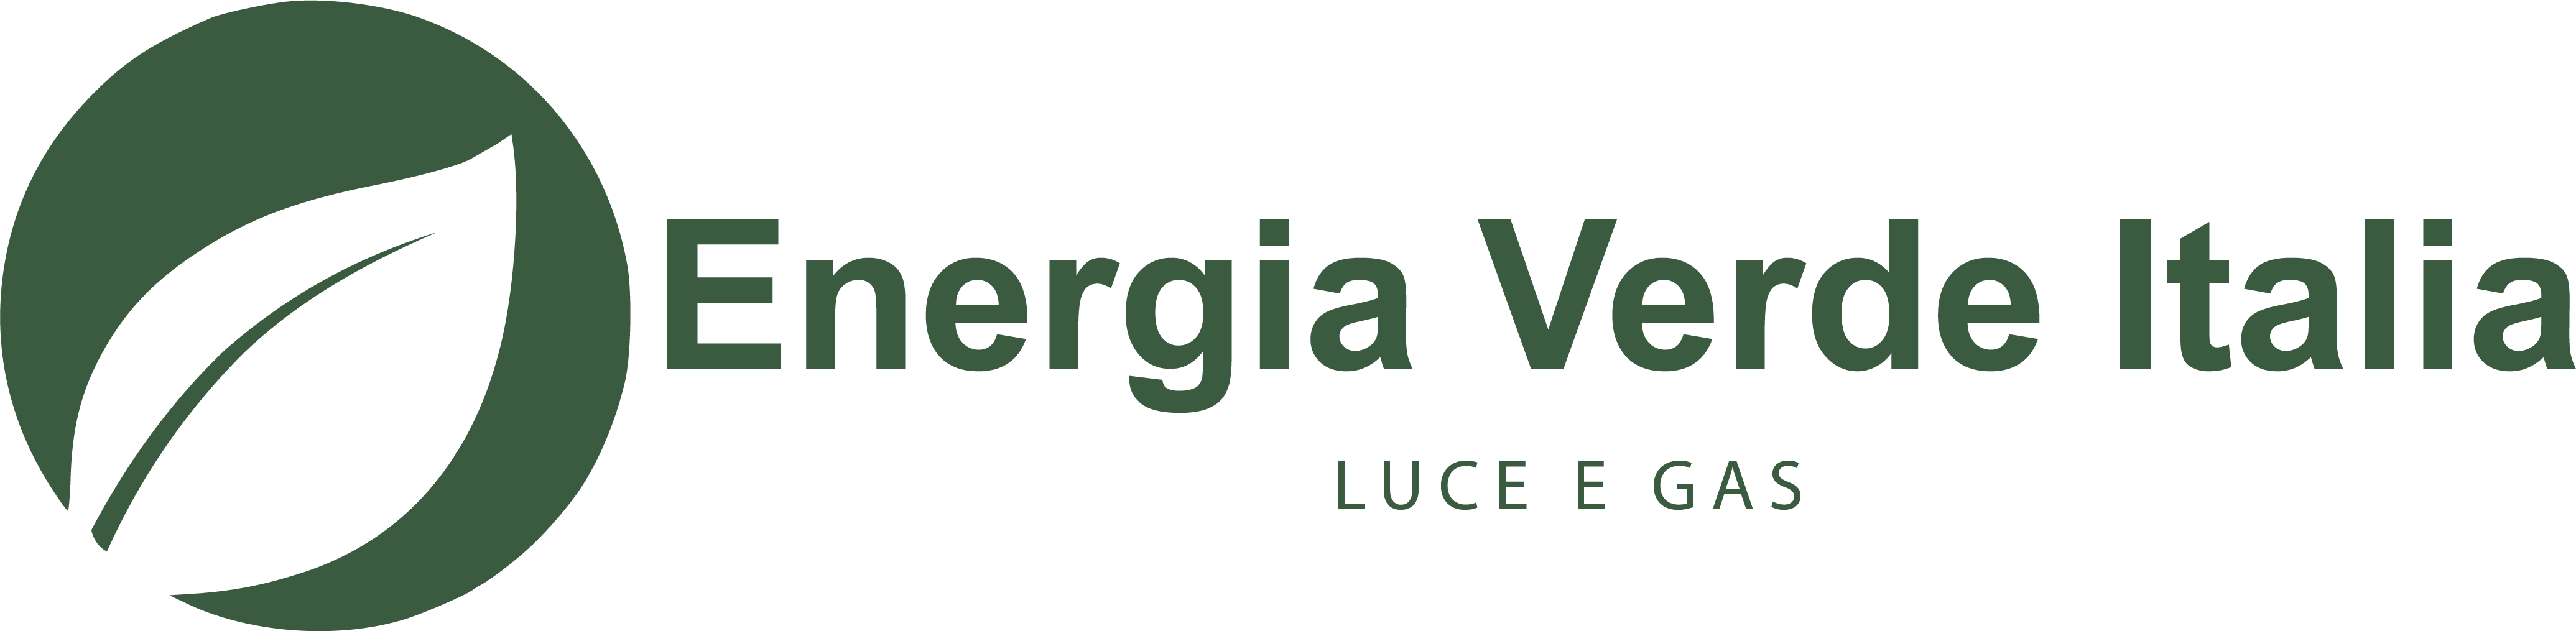 logo energia verde italia, fonti sostenibili